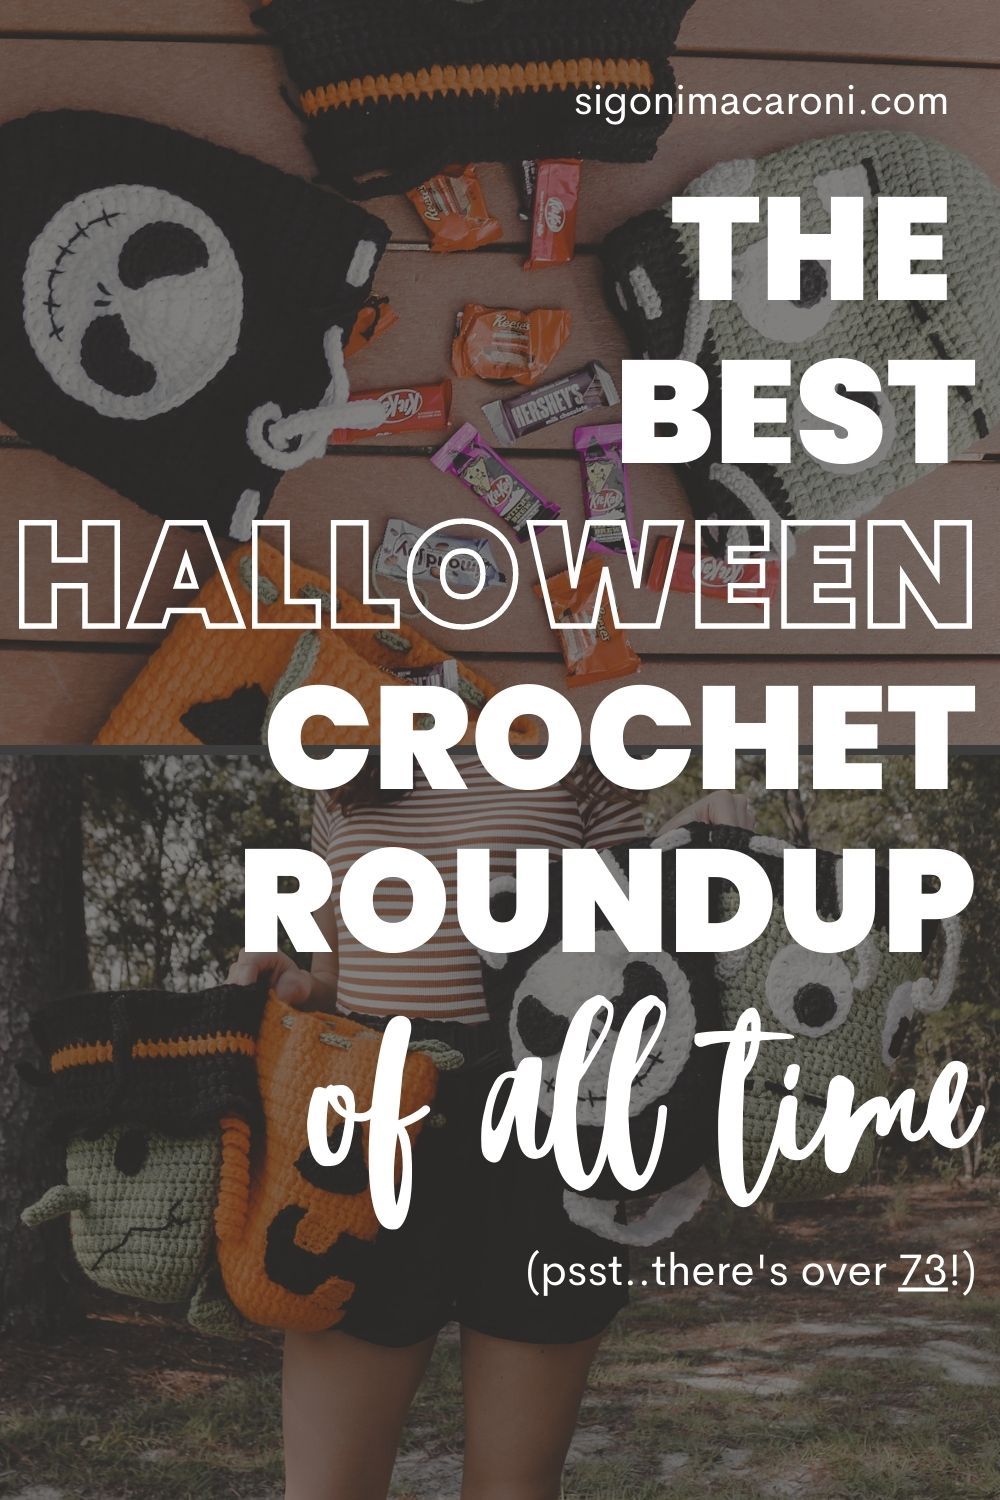 73+ Free Halloween Crochet Patterns (for spooky fun!) via @sigonimacaronii